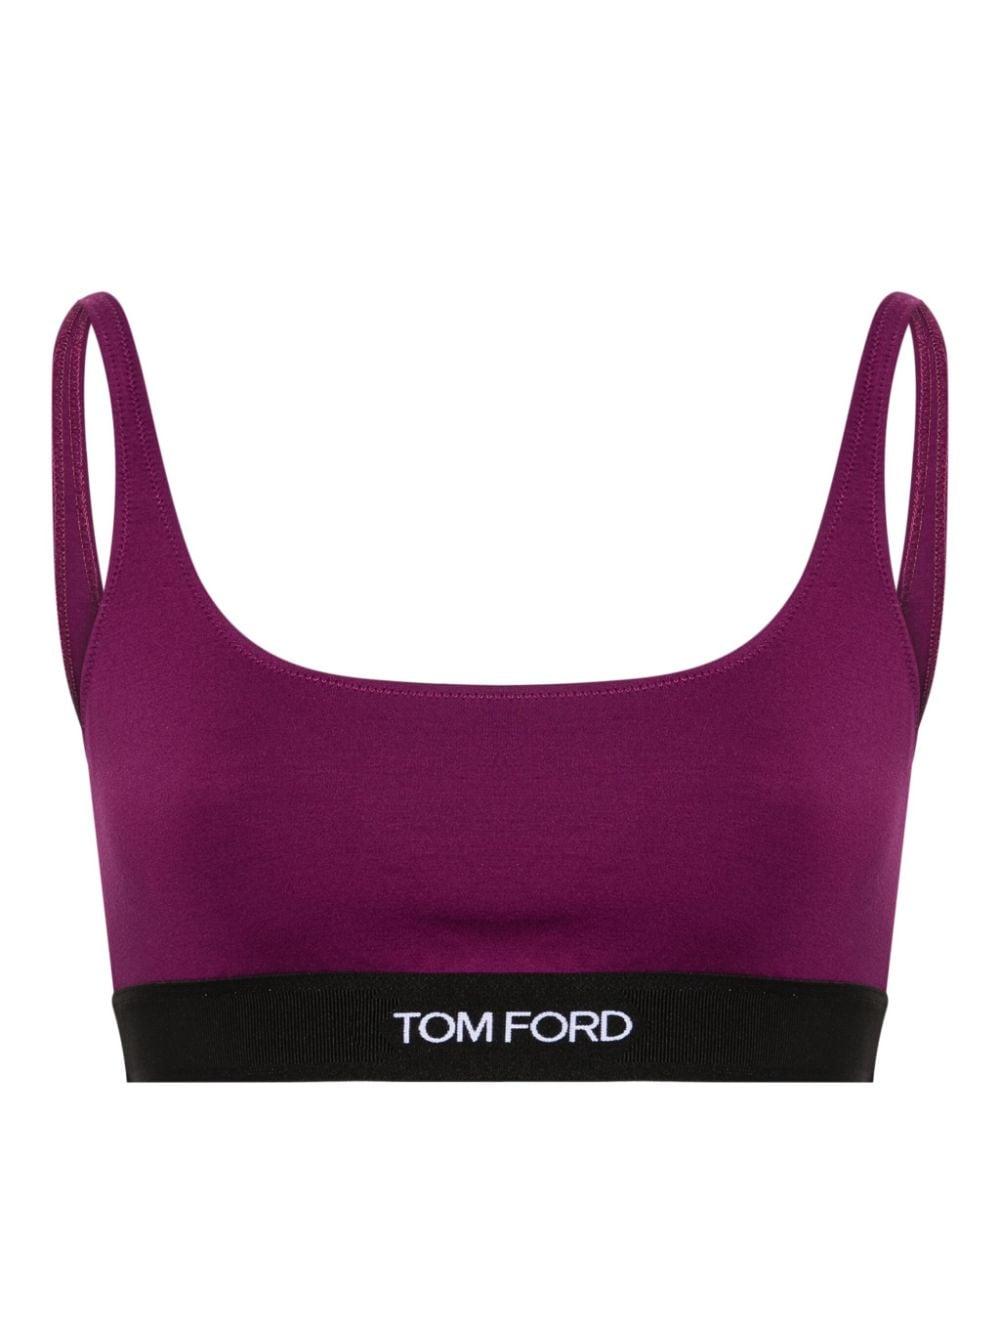 Tom Ford Signature Sleeveless Bralette in Purple